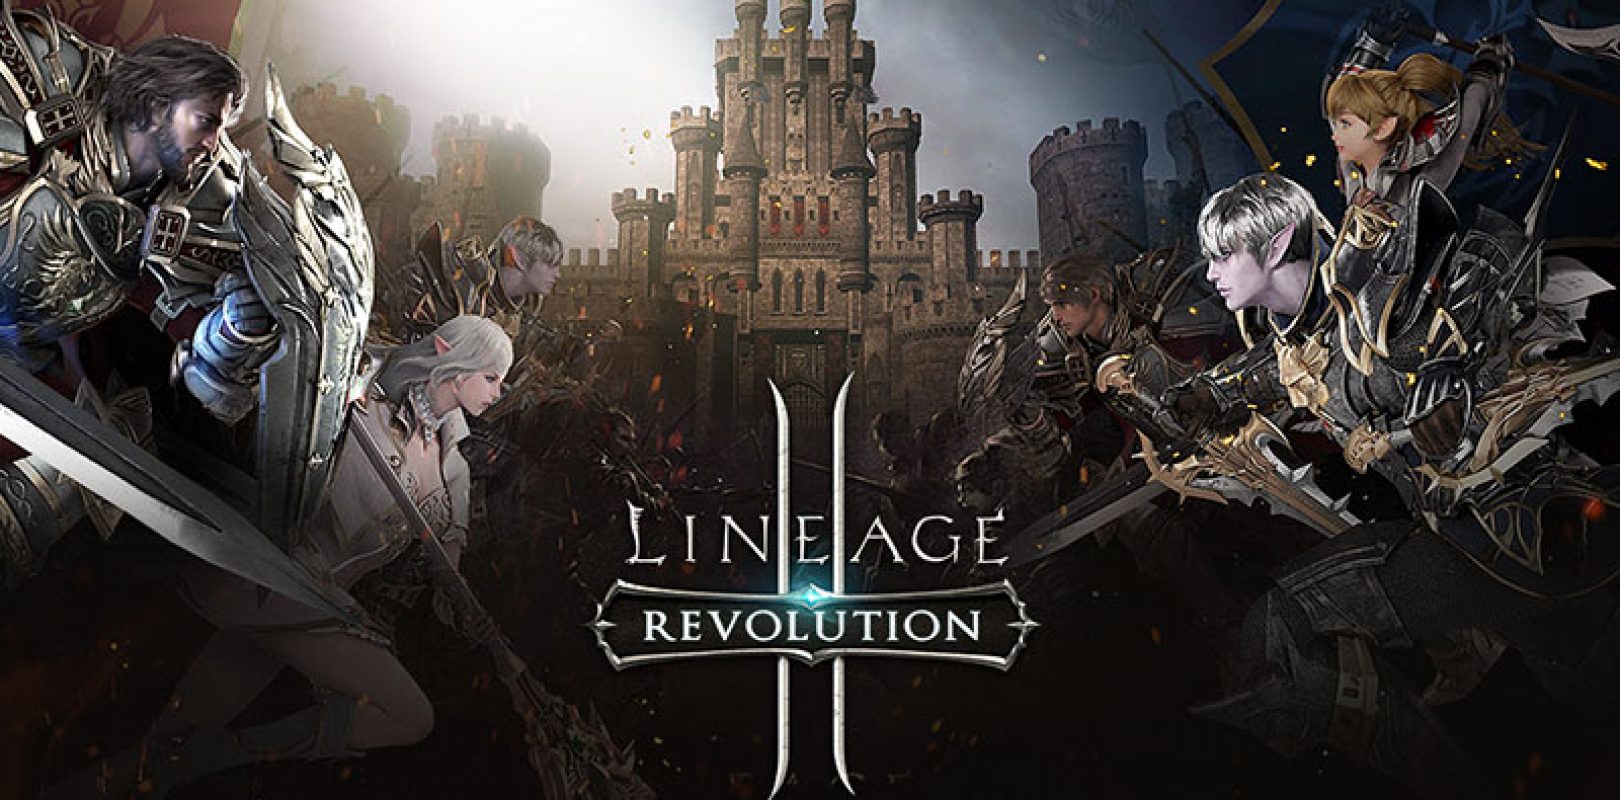 Эпоха 2 революция. Л2 революшен. Lineage II. Игра линеидж2 револьшин. Lineage Revolution.